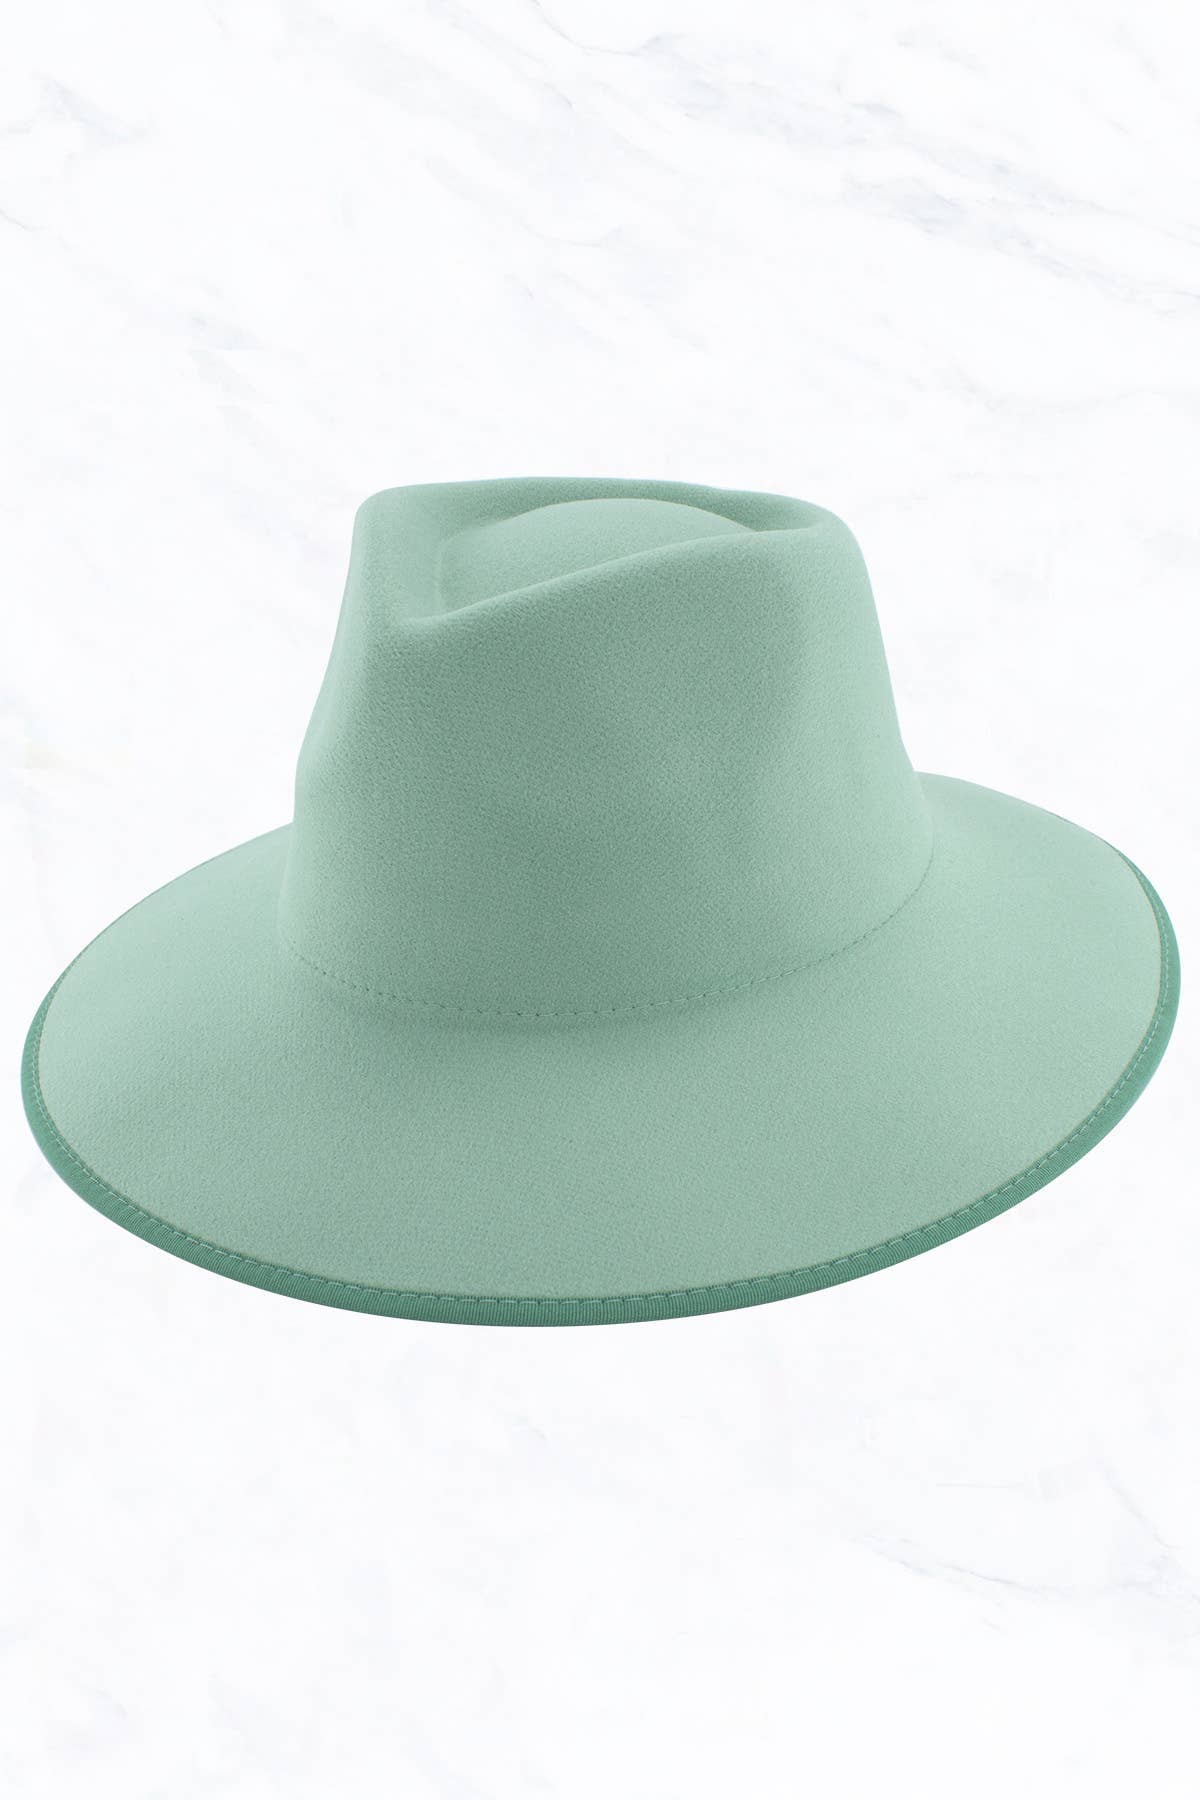 Wrap of Edge Teardrop Shape Top Big Brim Hat: Mint Green